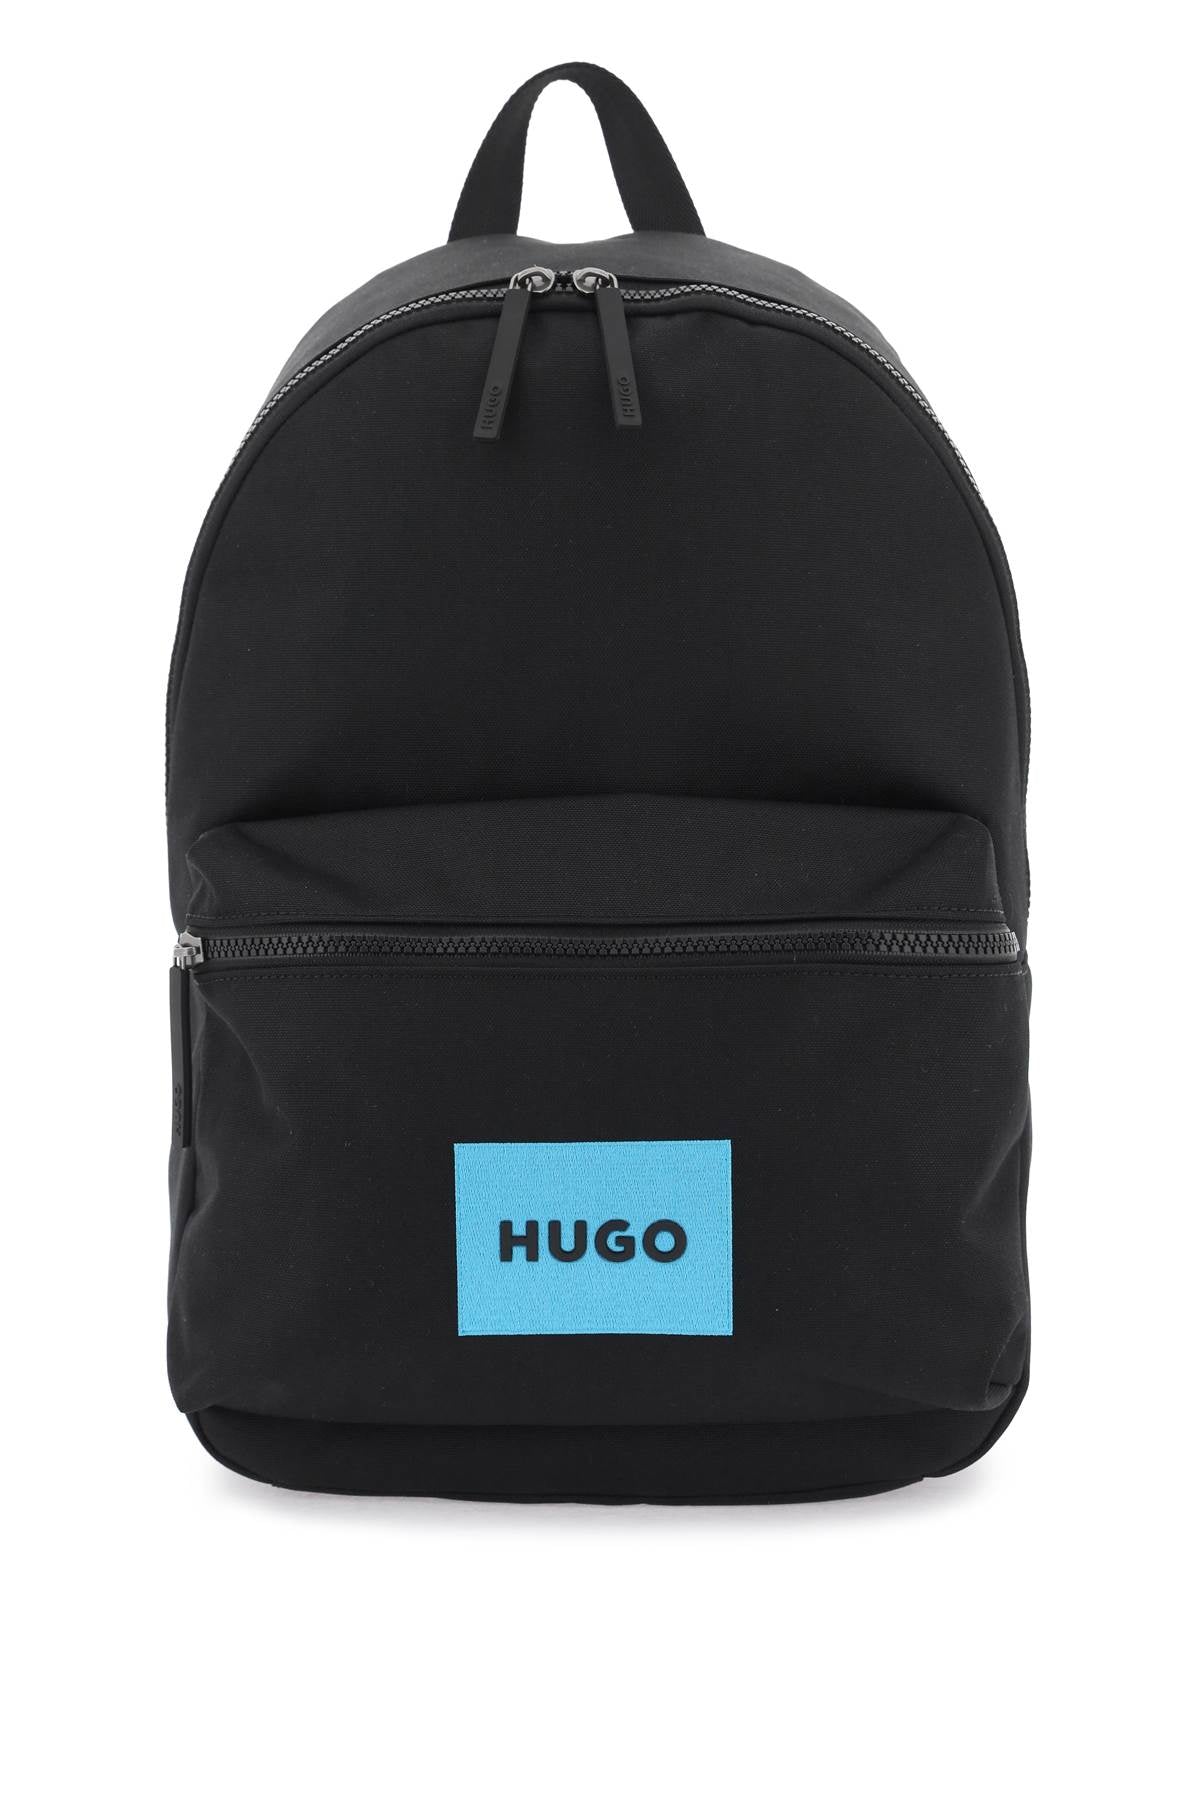 Hugo recycled nylon backpack in-0